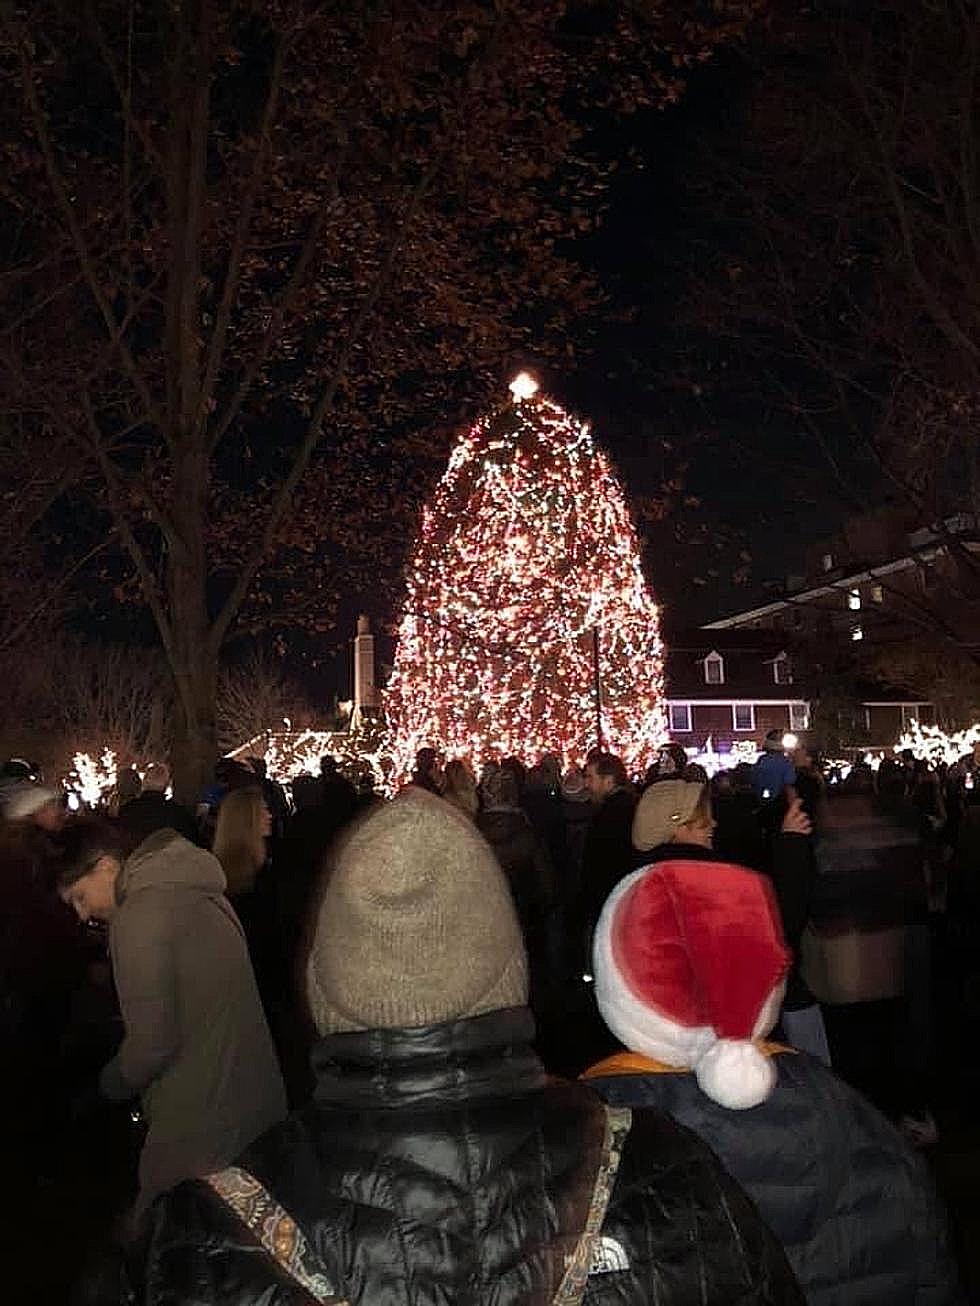 Date Set for Palmer Square Christmas Tree Lighting in Princeton, NJ